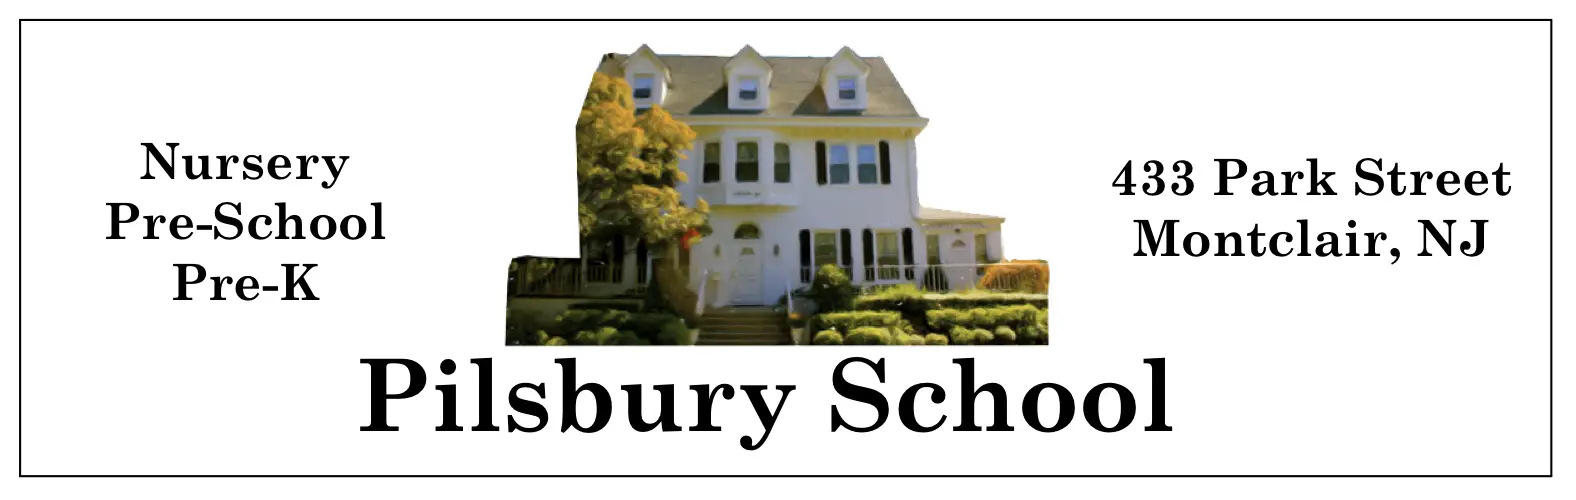 Pilsbury Nursery School, Inc.